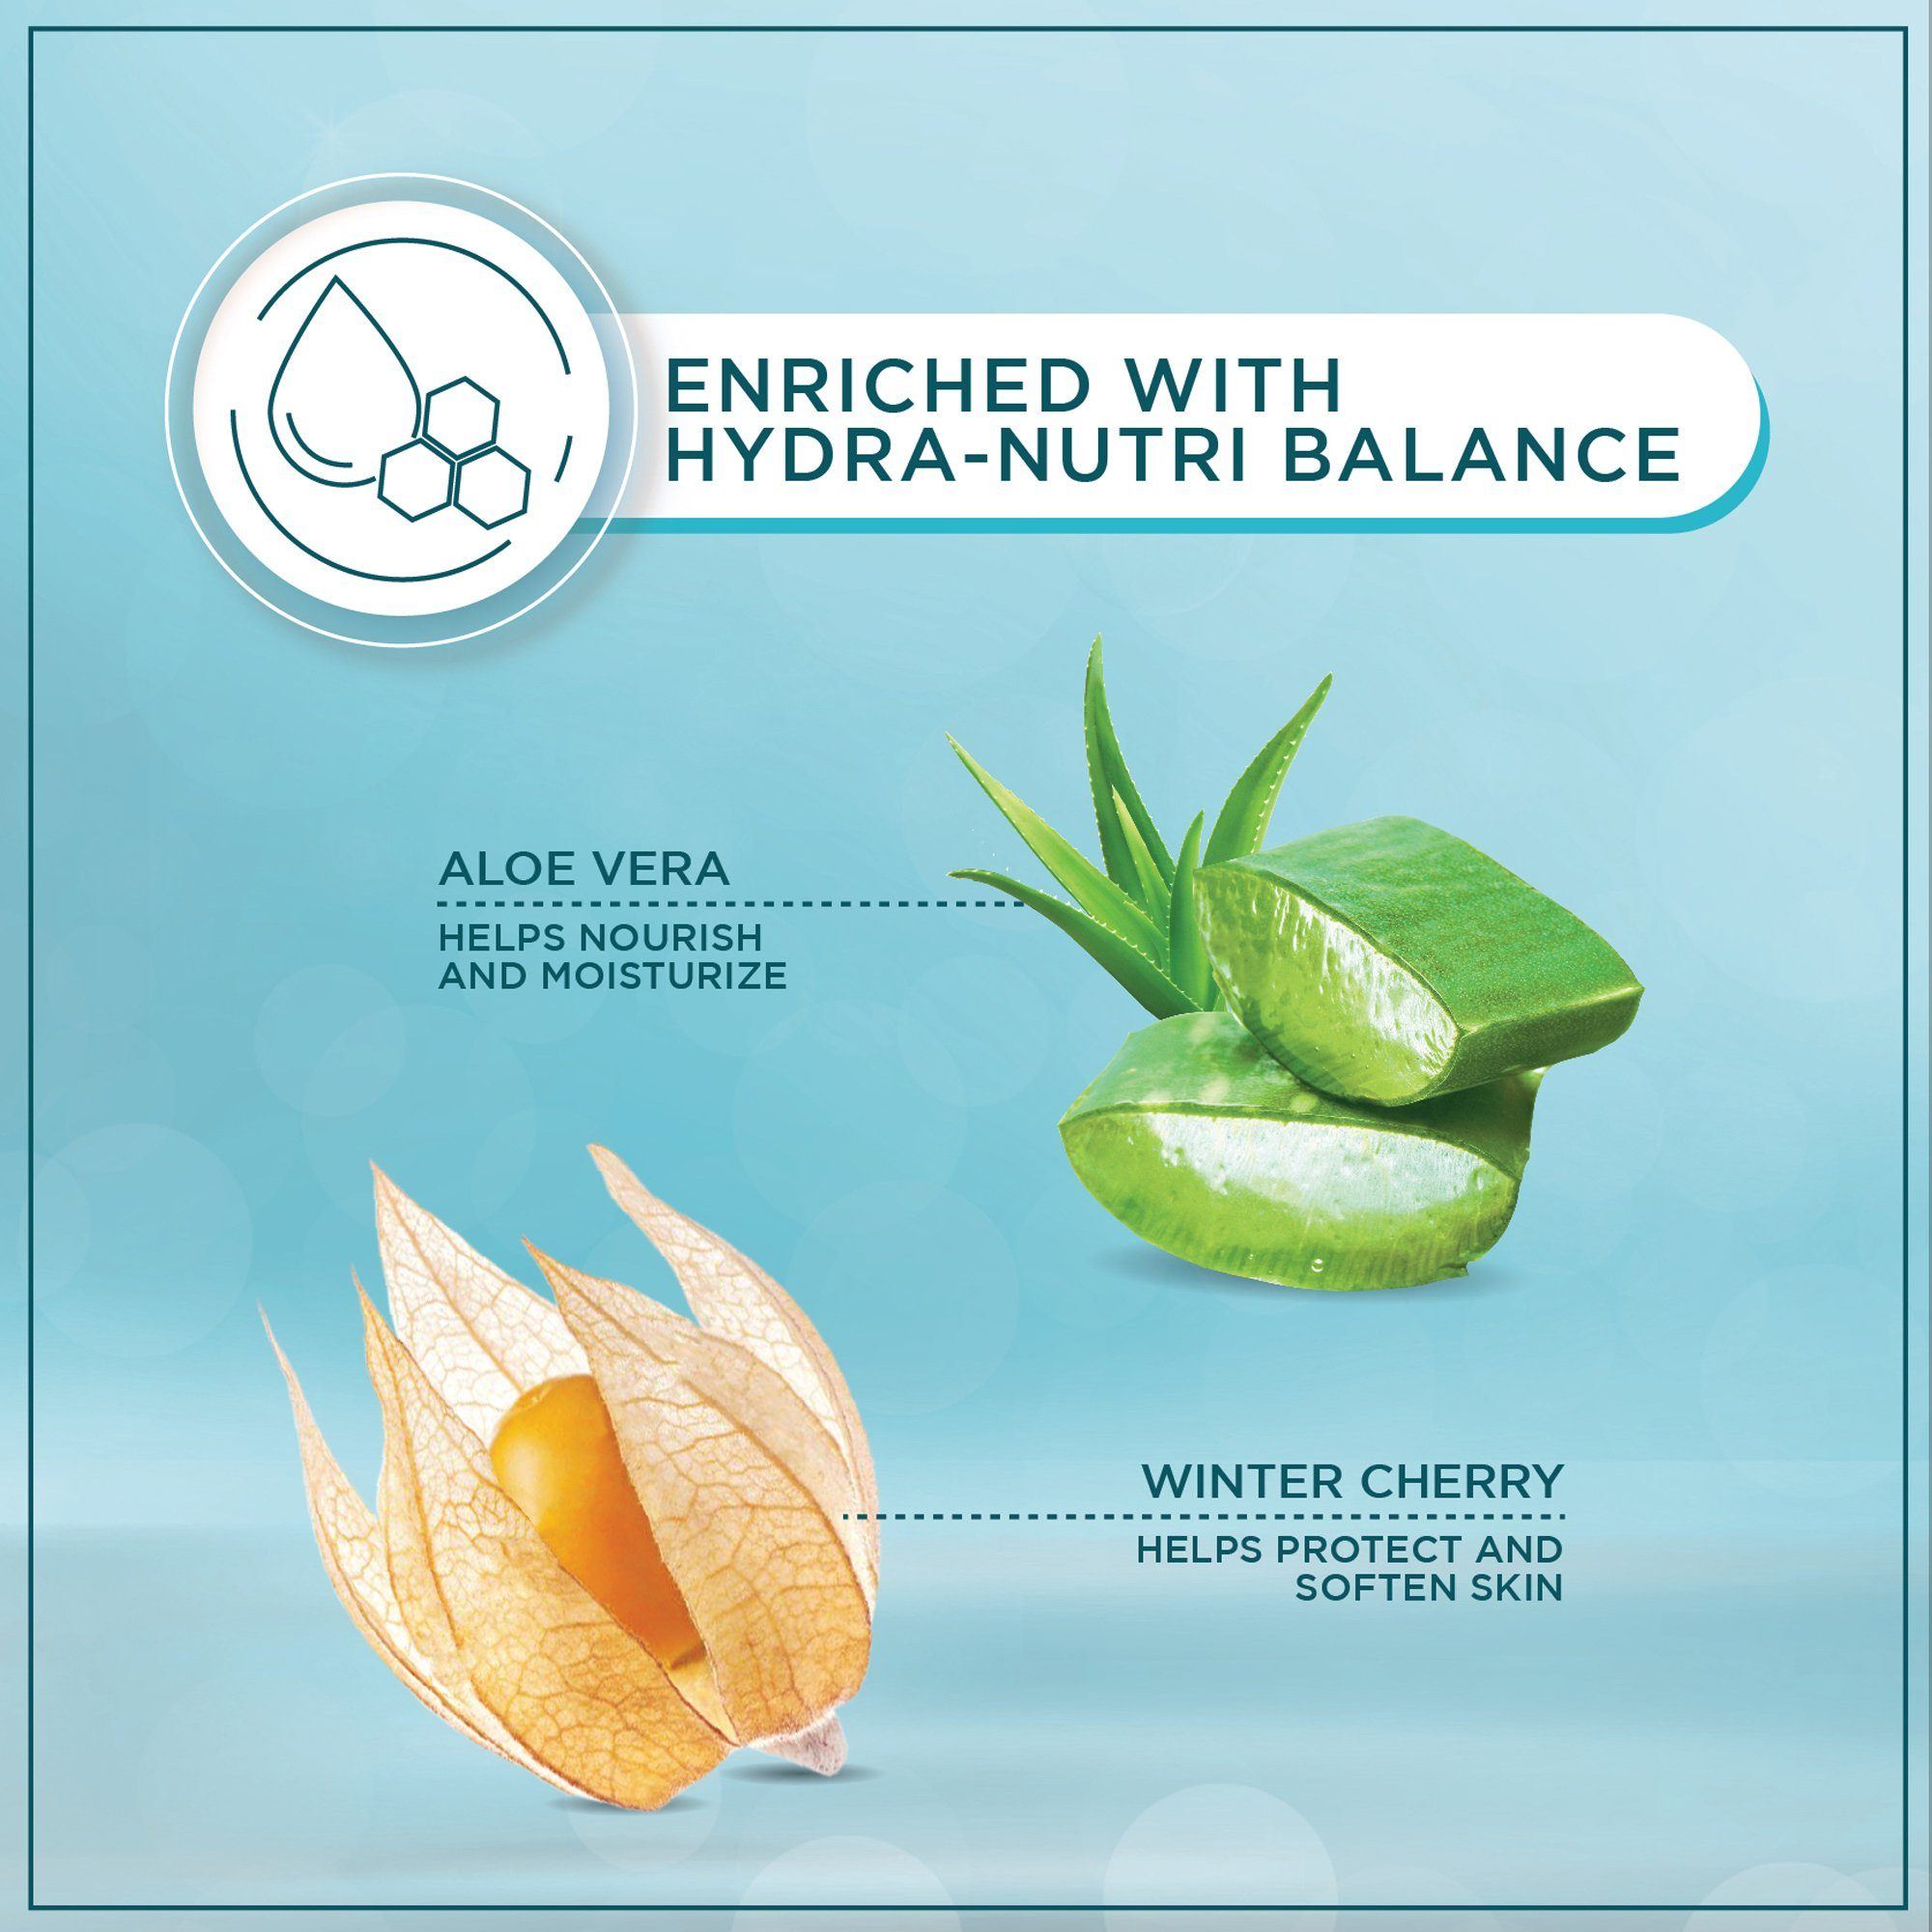 Himalaya Nourishing Body Lotion - With the goodness of Aloe Vera & Winter Cherry